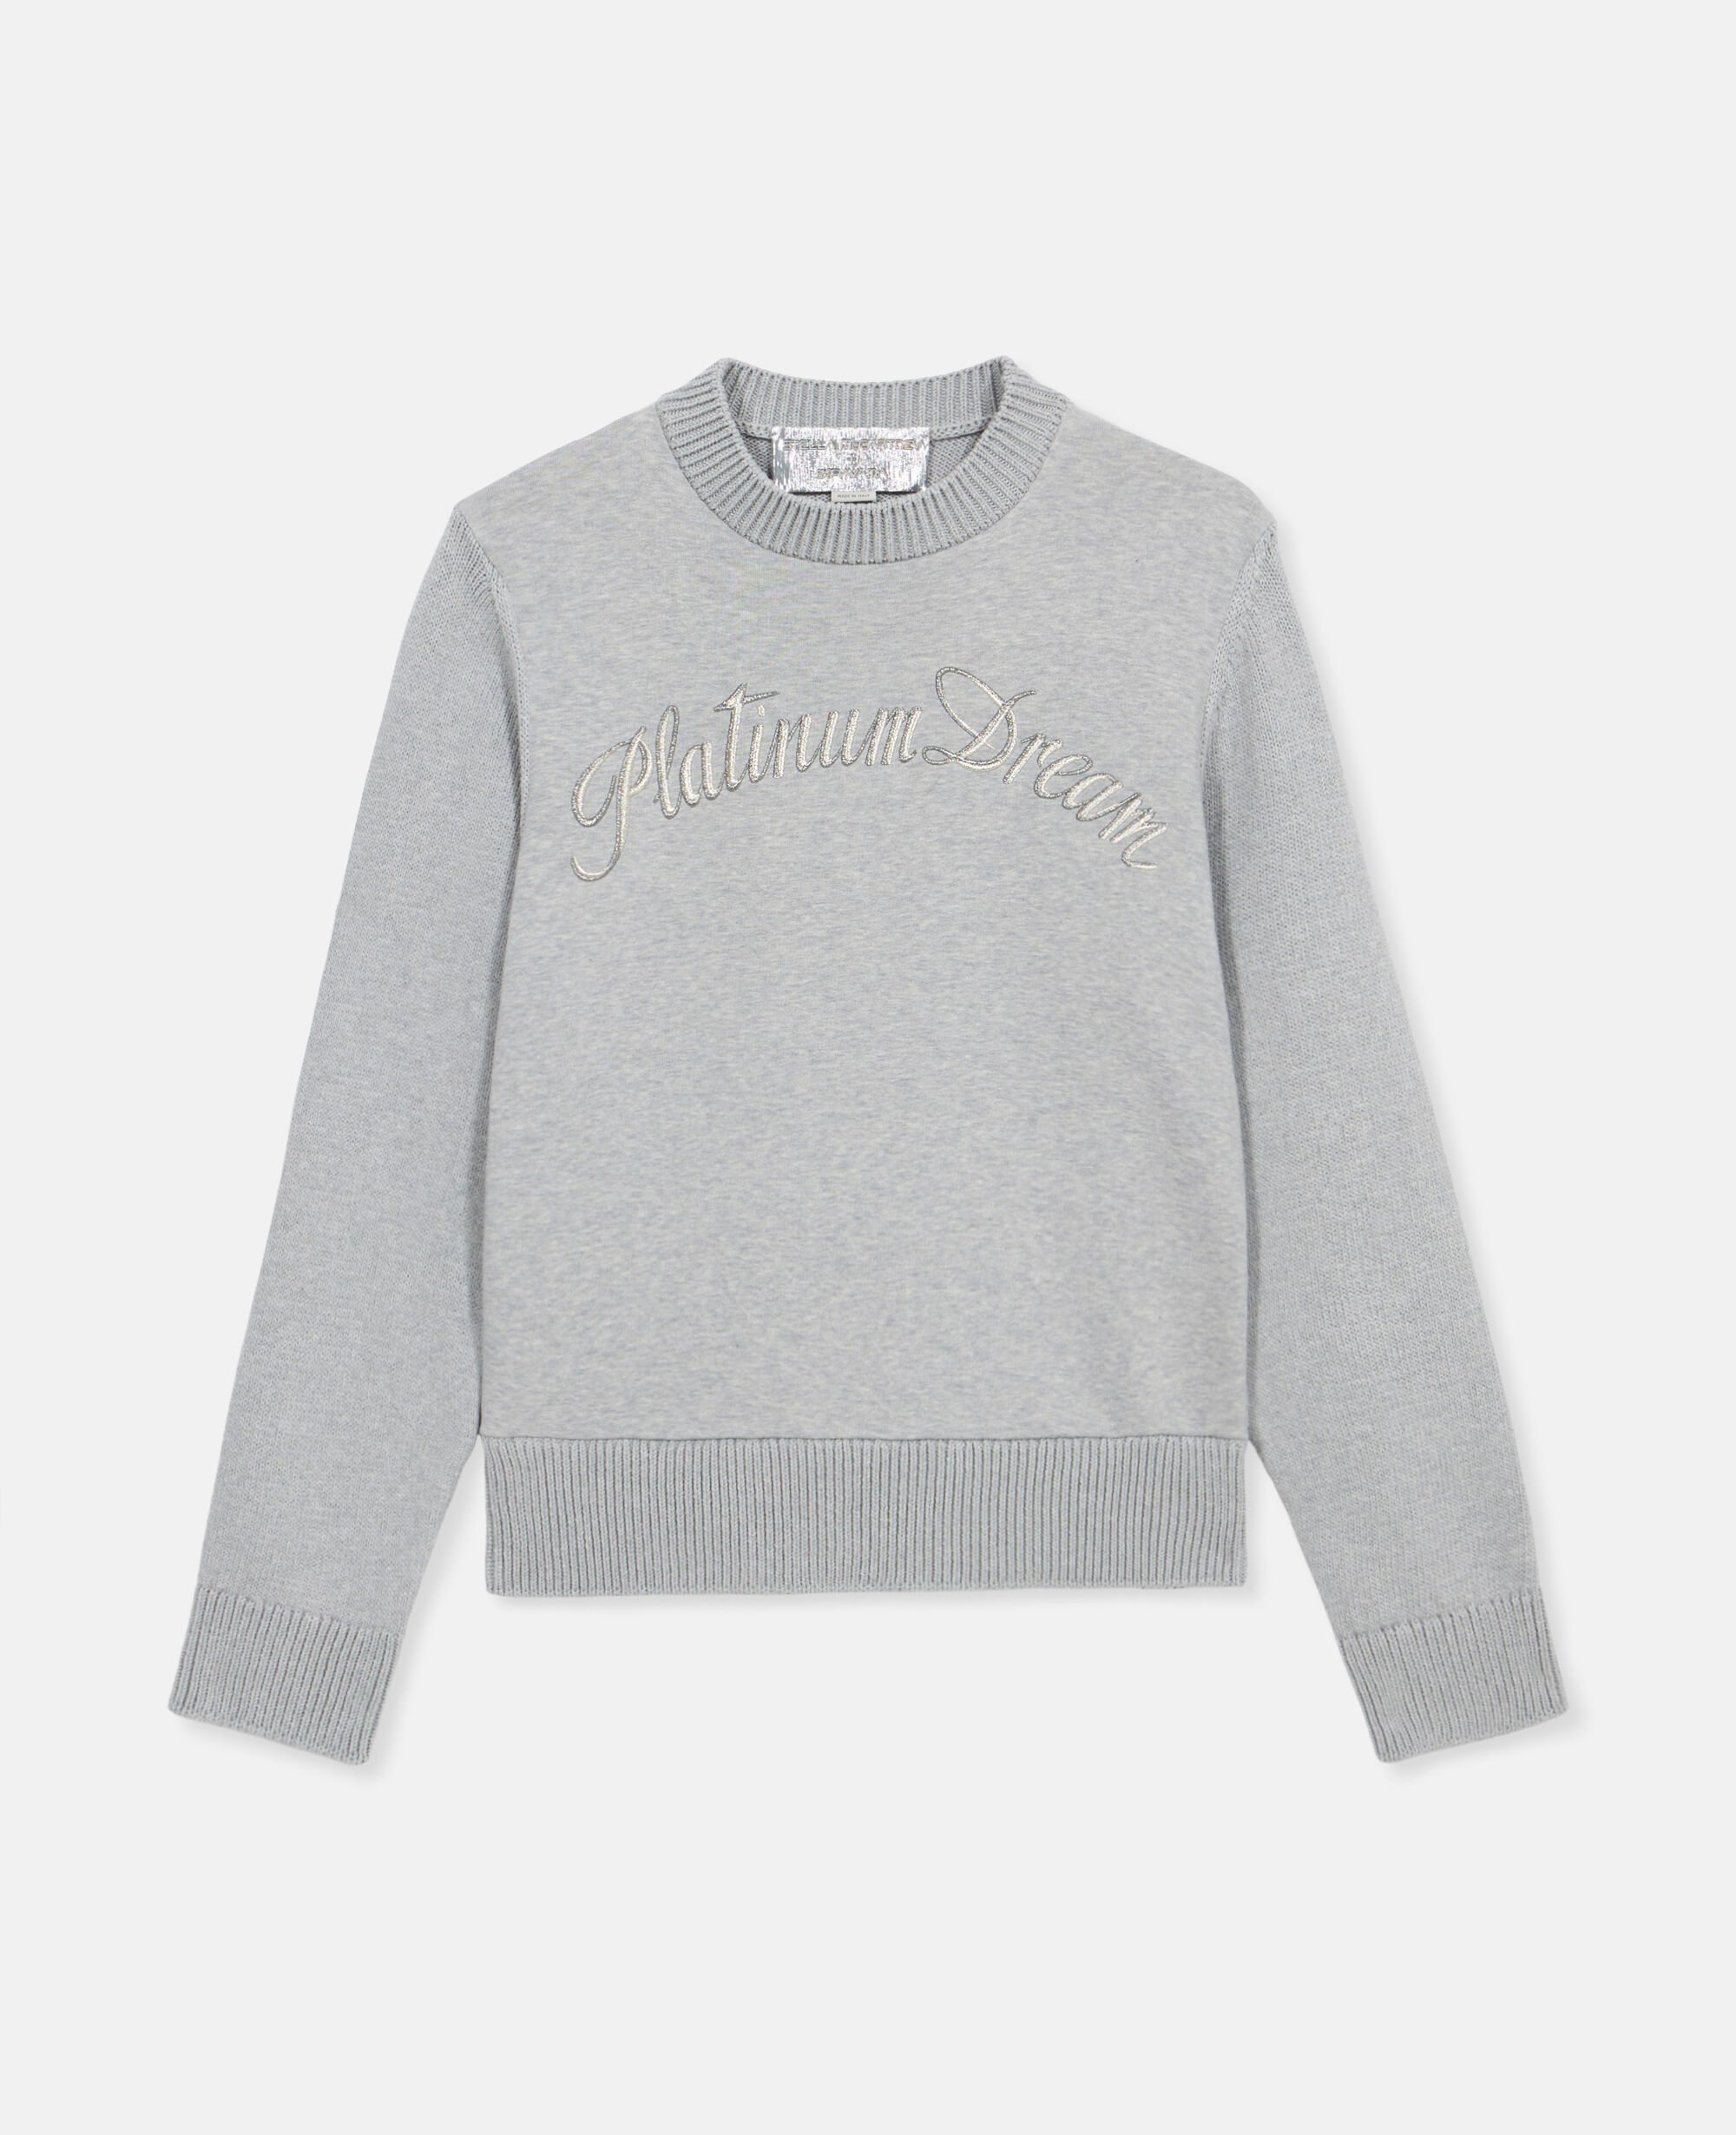 Stella McCartney Black Embroidered Sweater